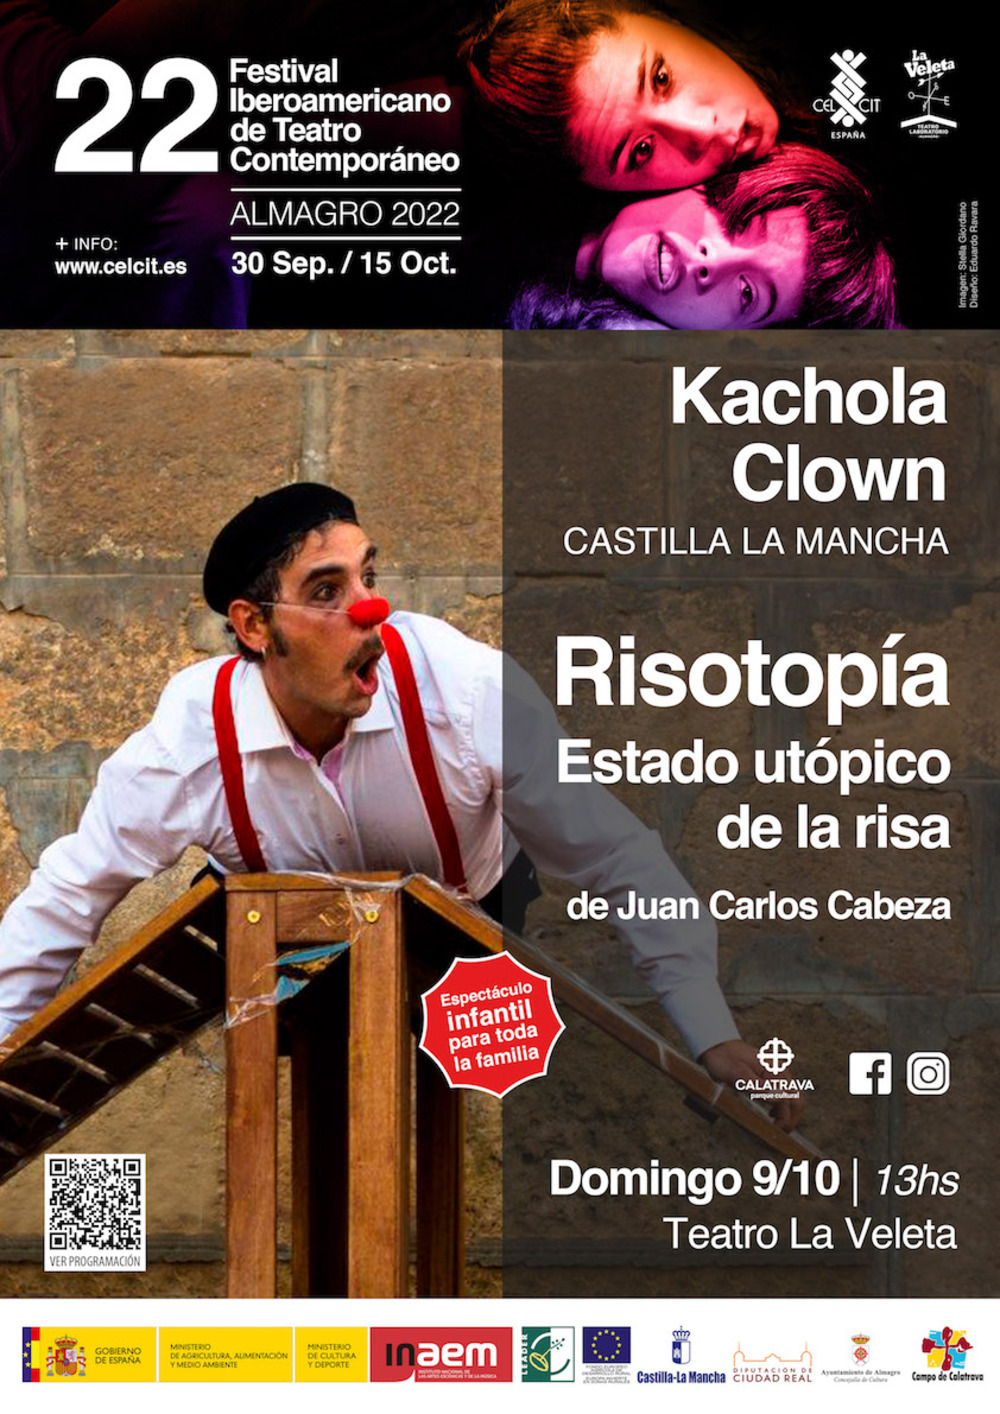 Festival Iberoamericano de Teatro llega a segunda semana